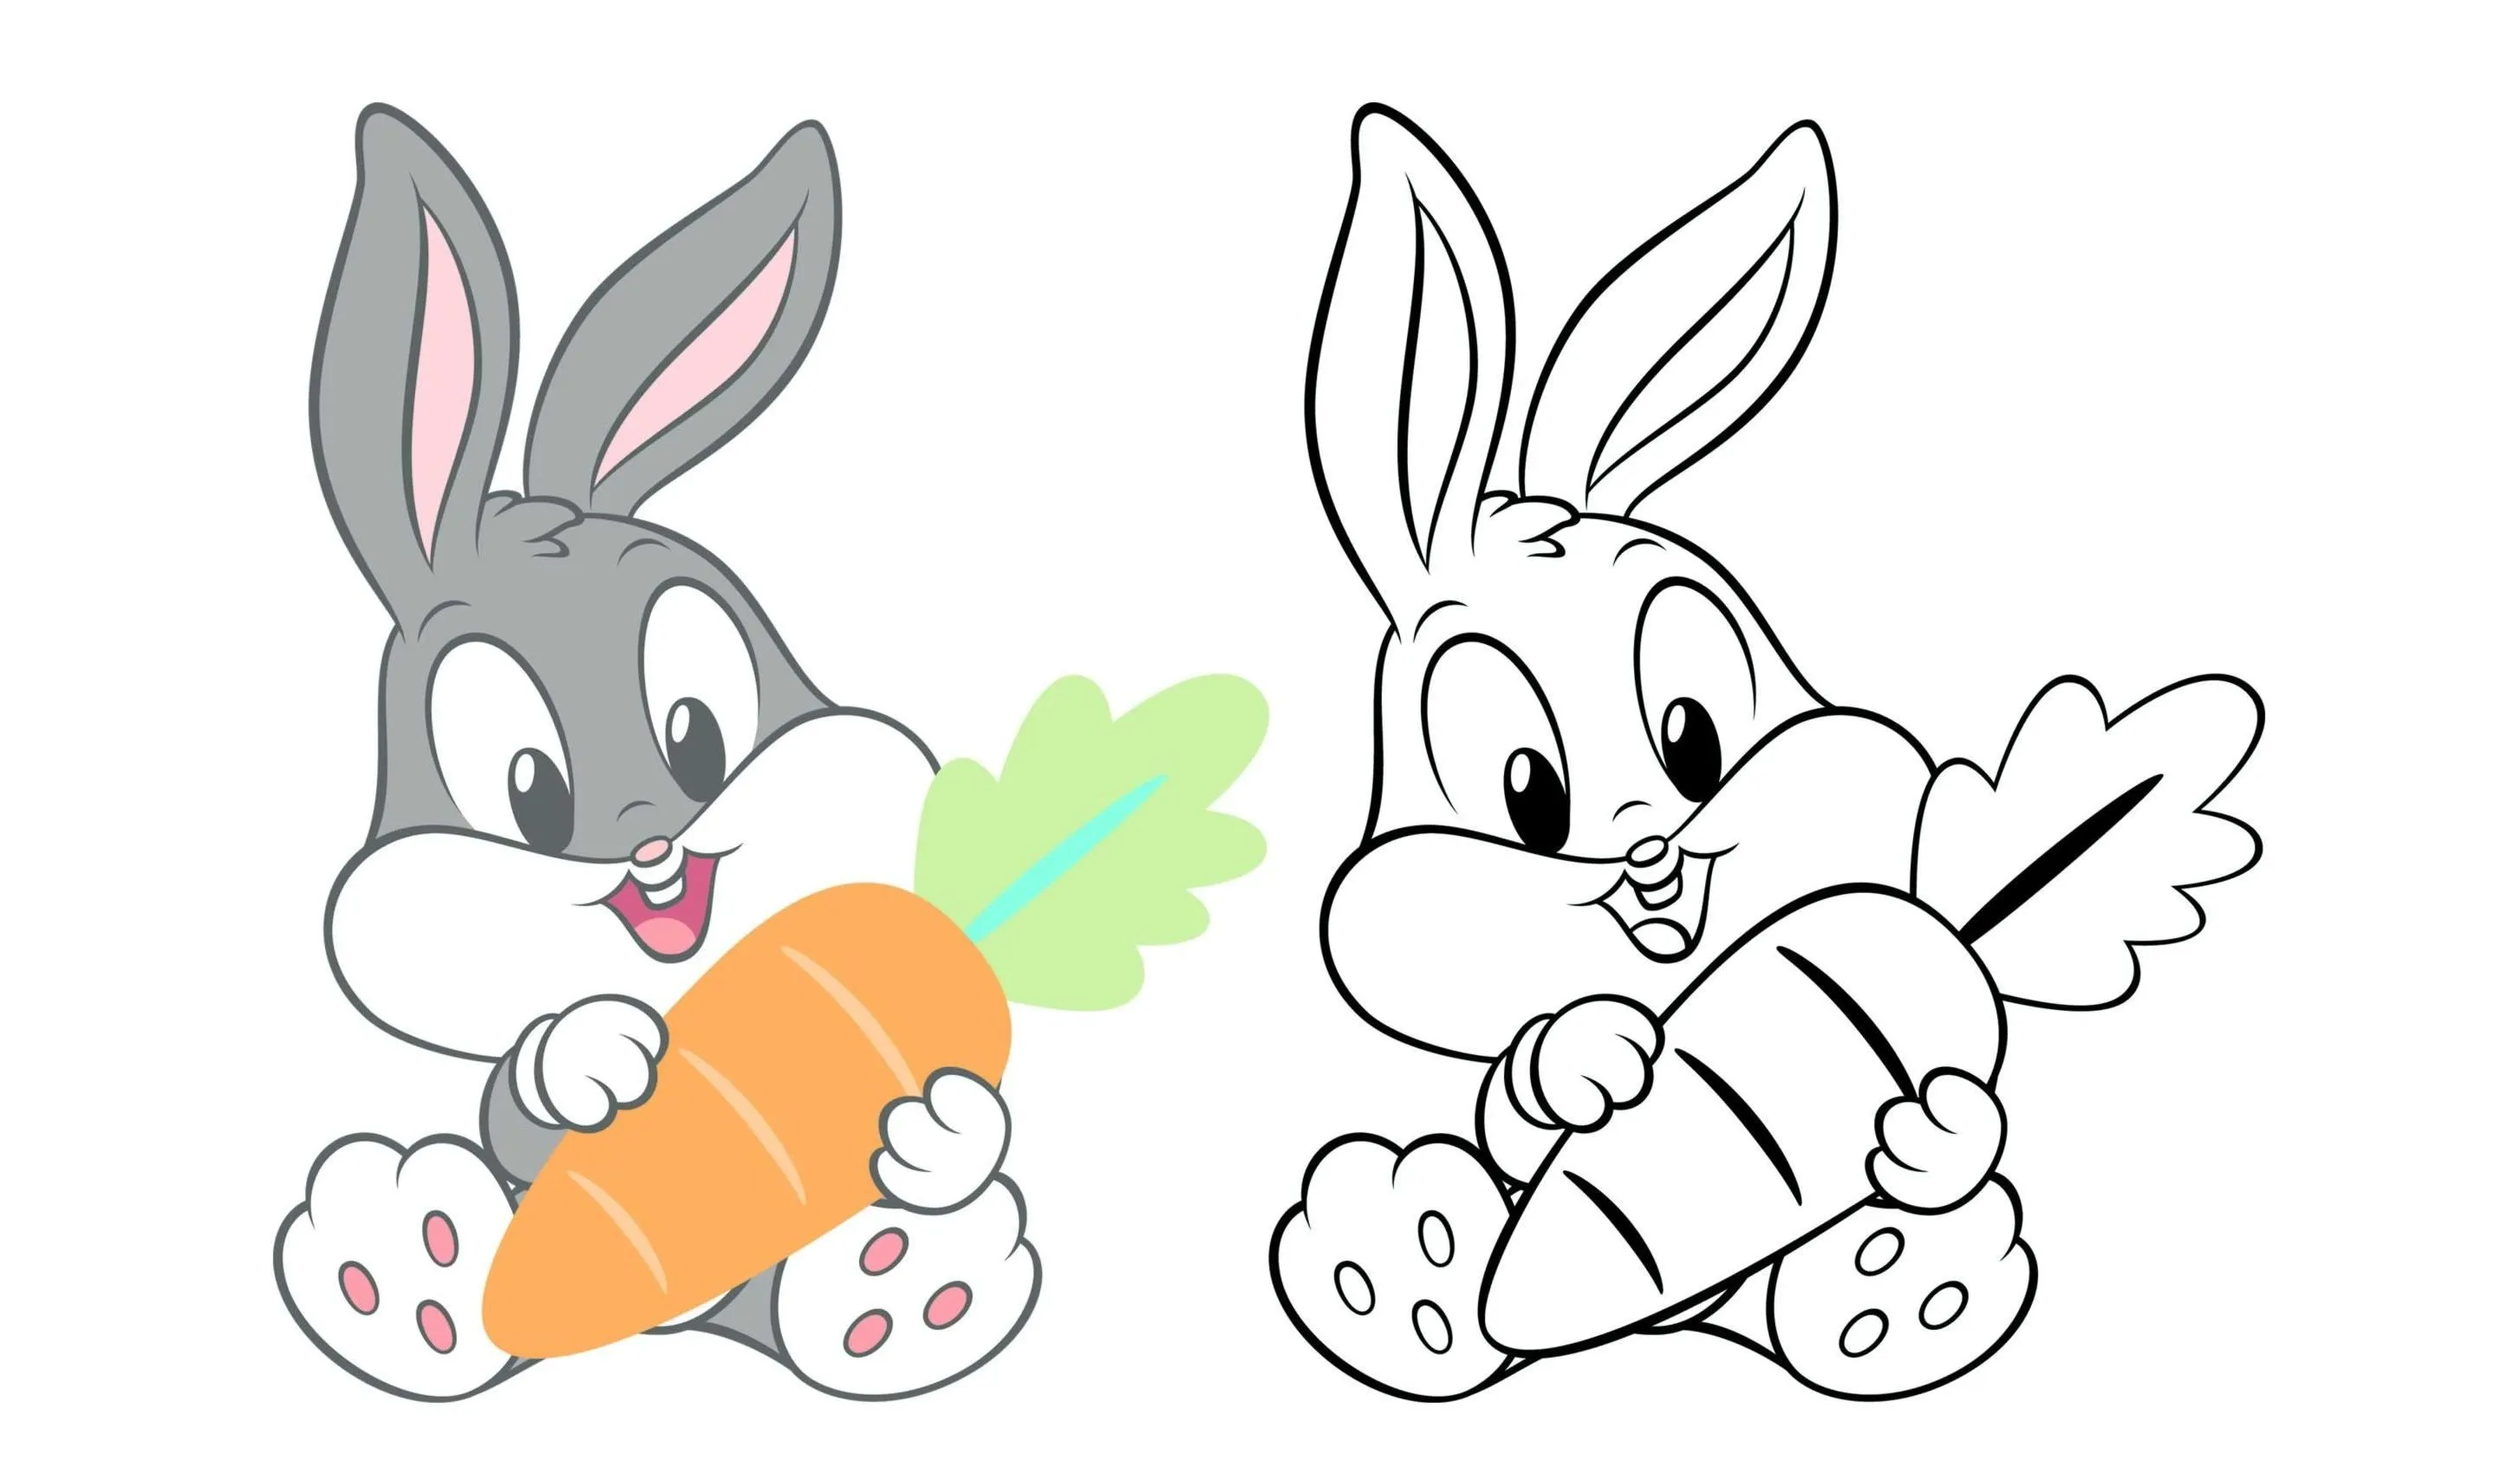 Bugs bunny bebé para colorear - Imagui